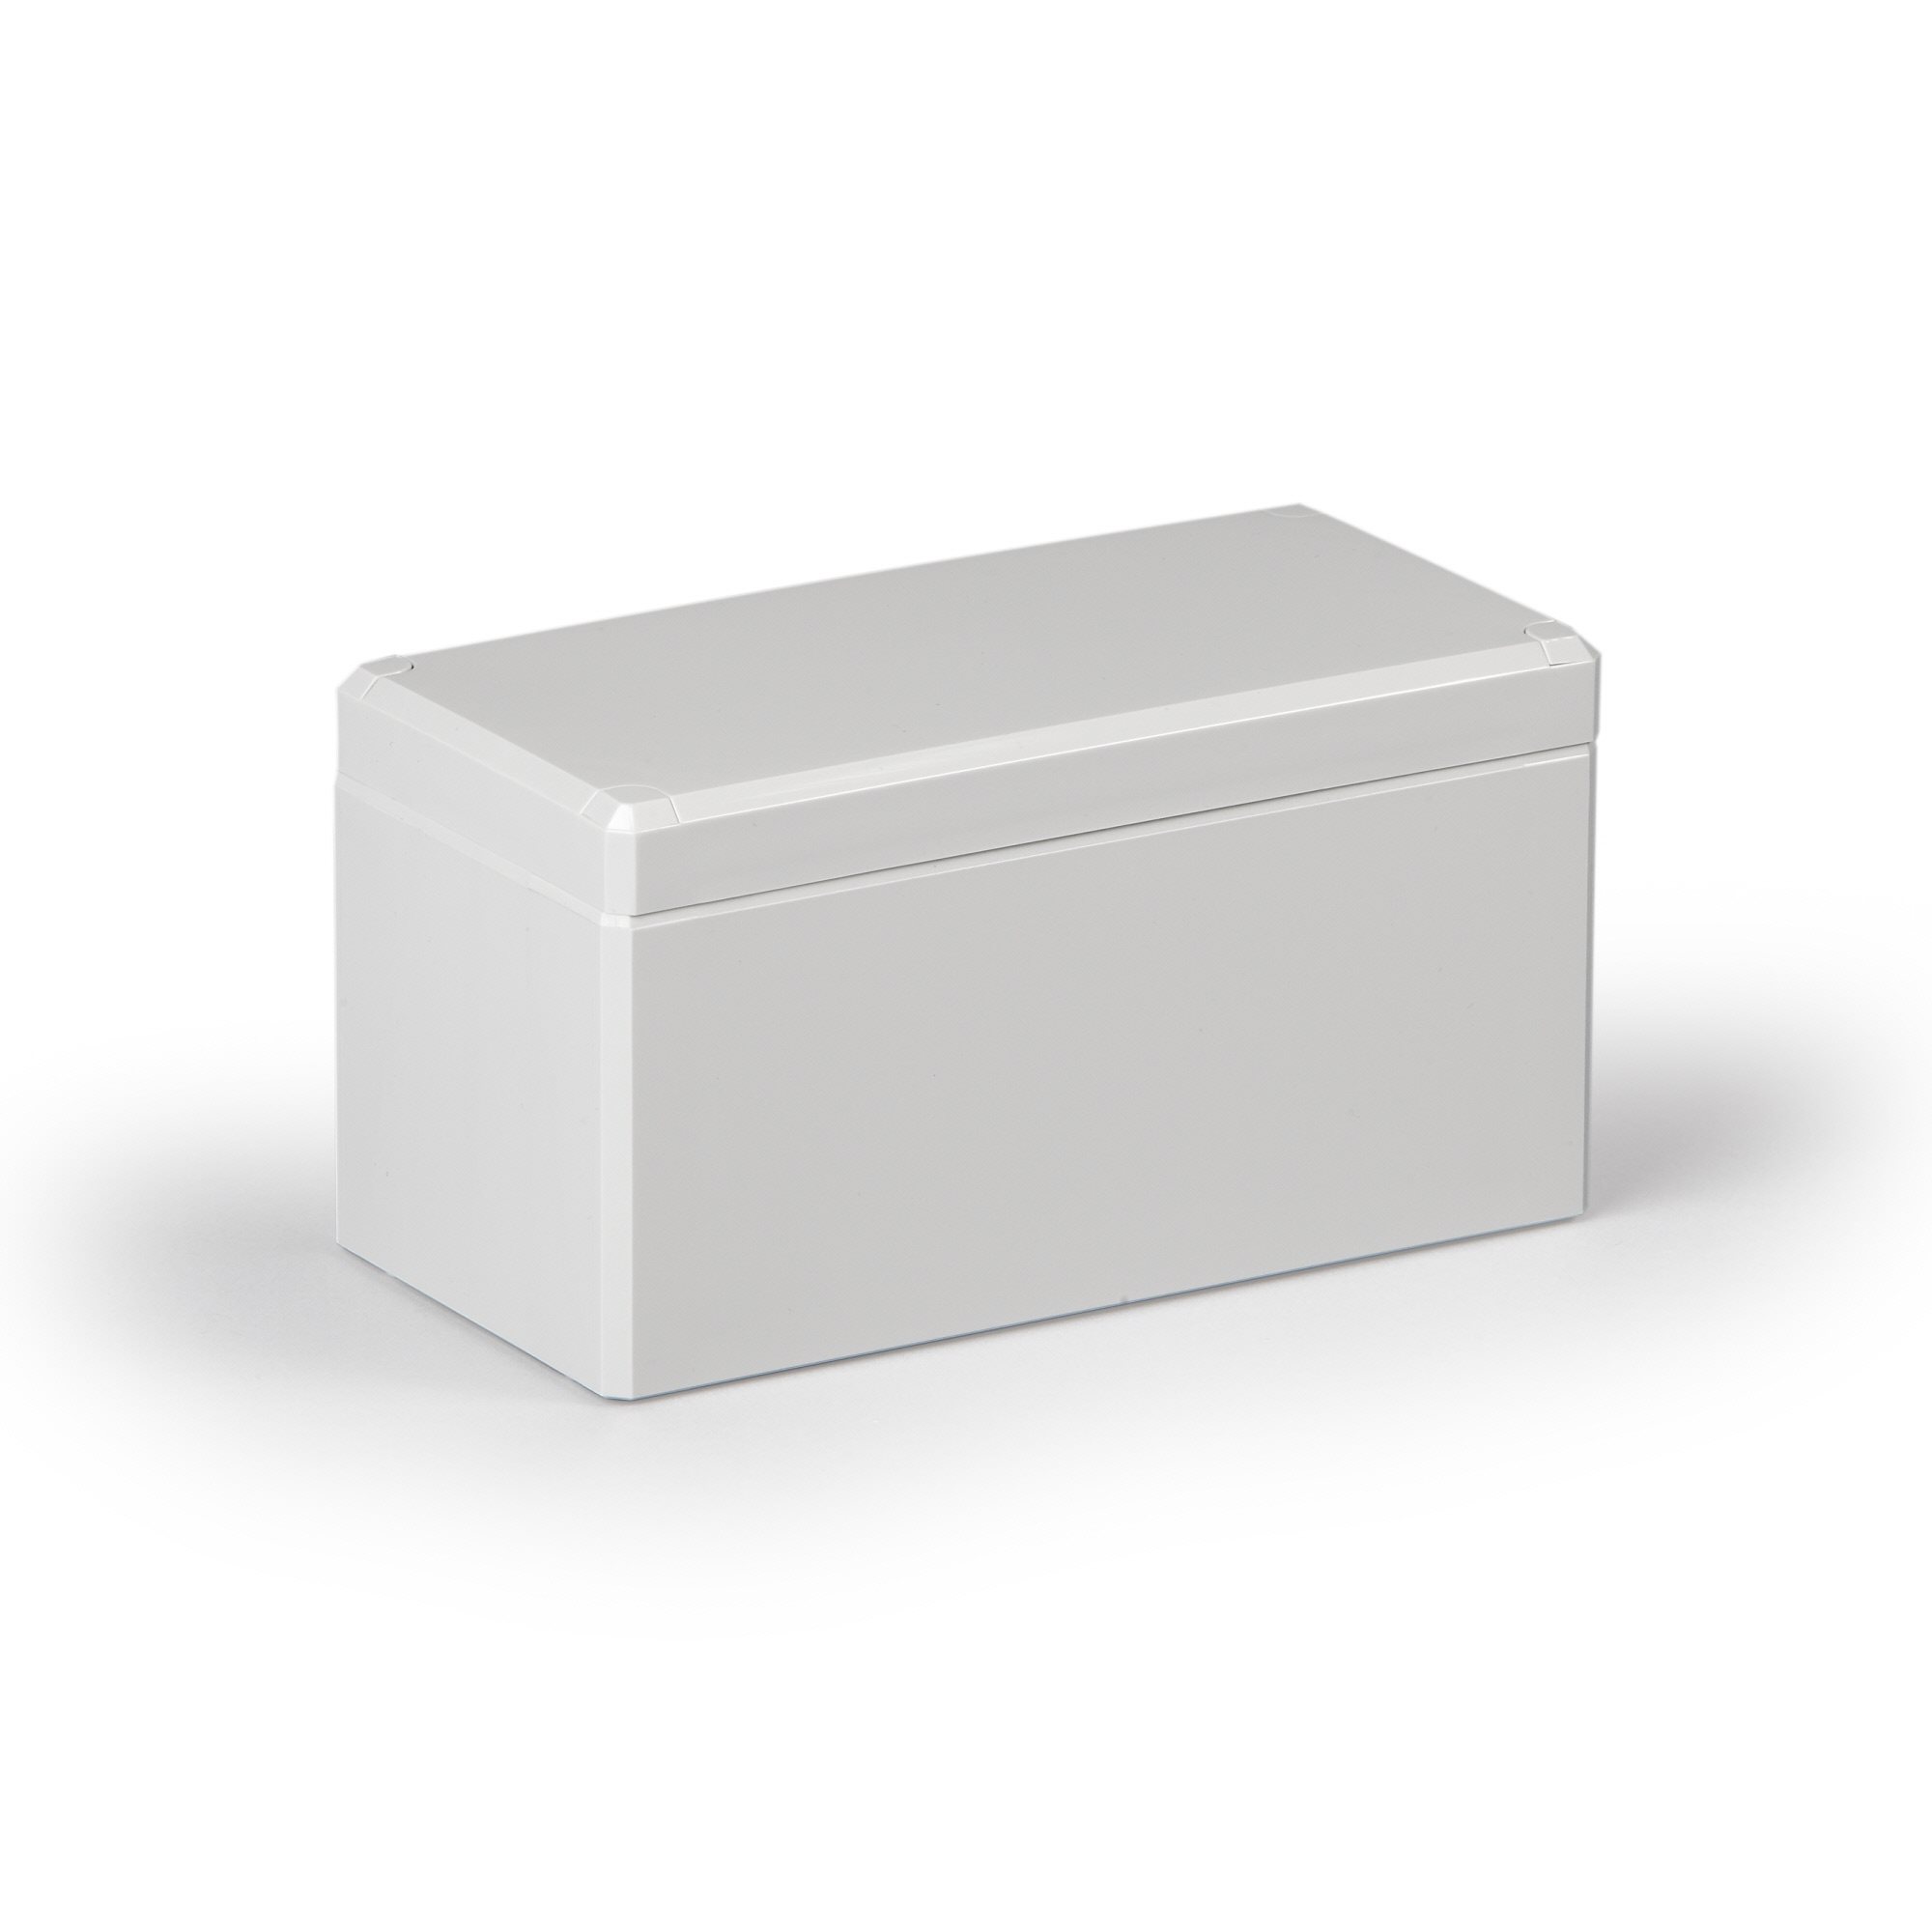 DPCP Cubo D Polycarbonate Terminal Box | 80x160x86 |DPCP081609G